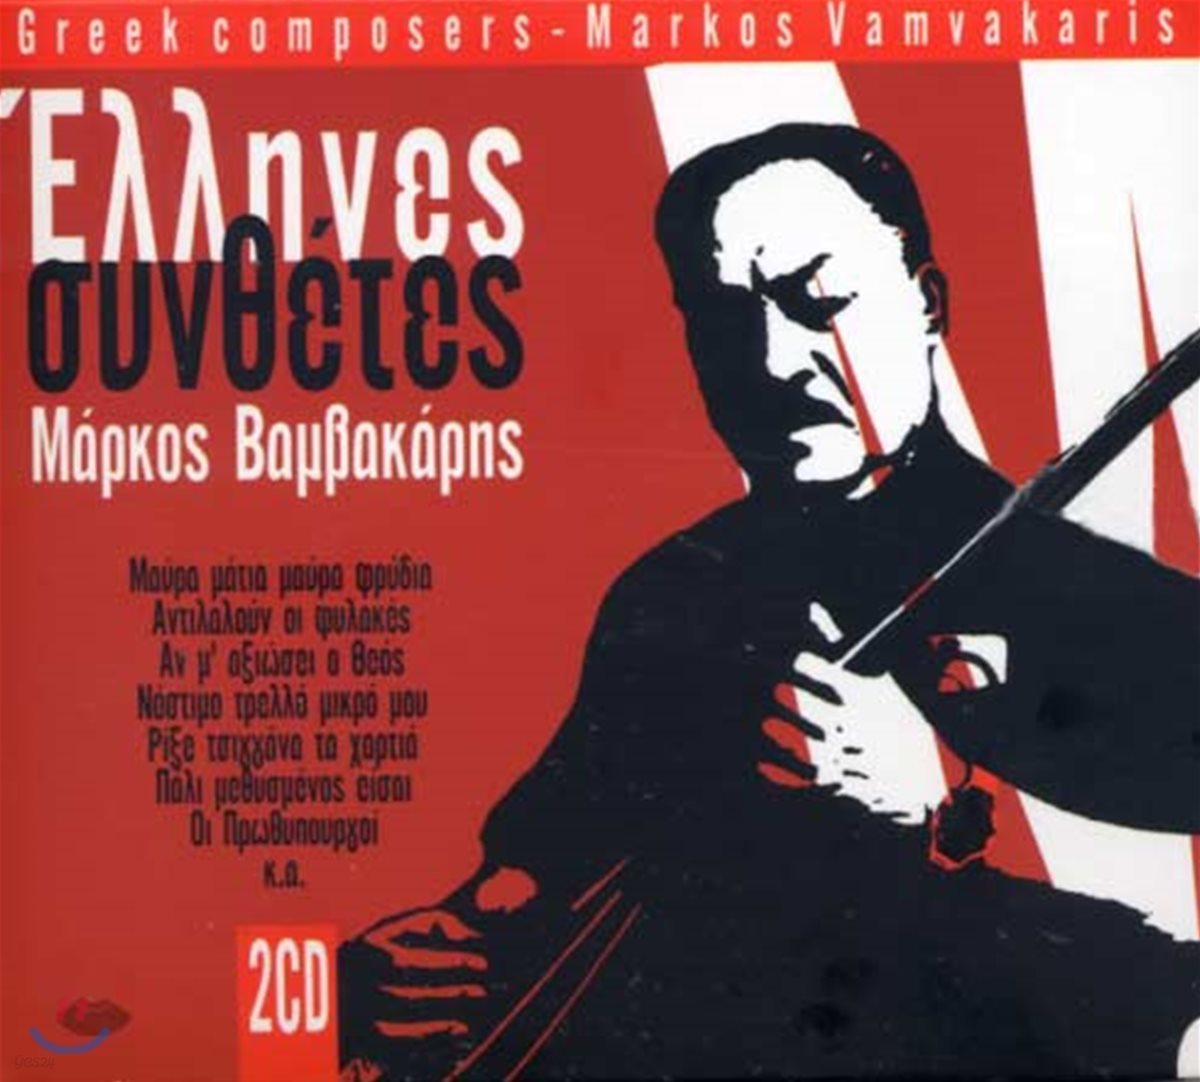 Markos Vamvakaris - Greek Composers